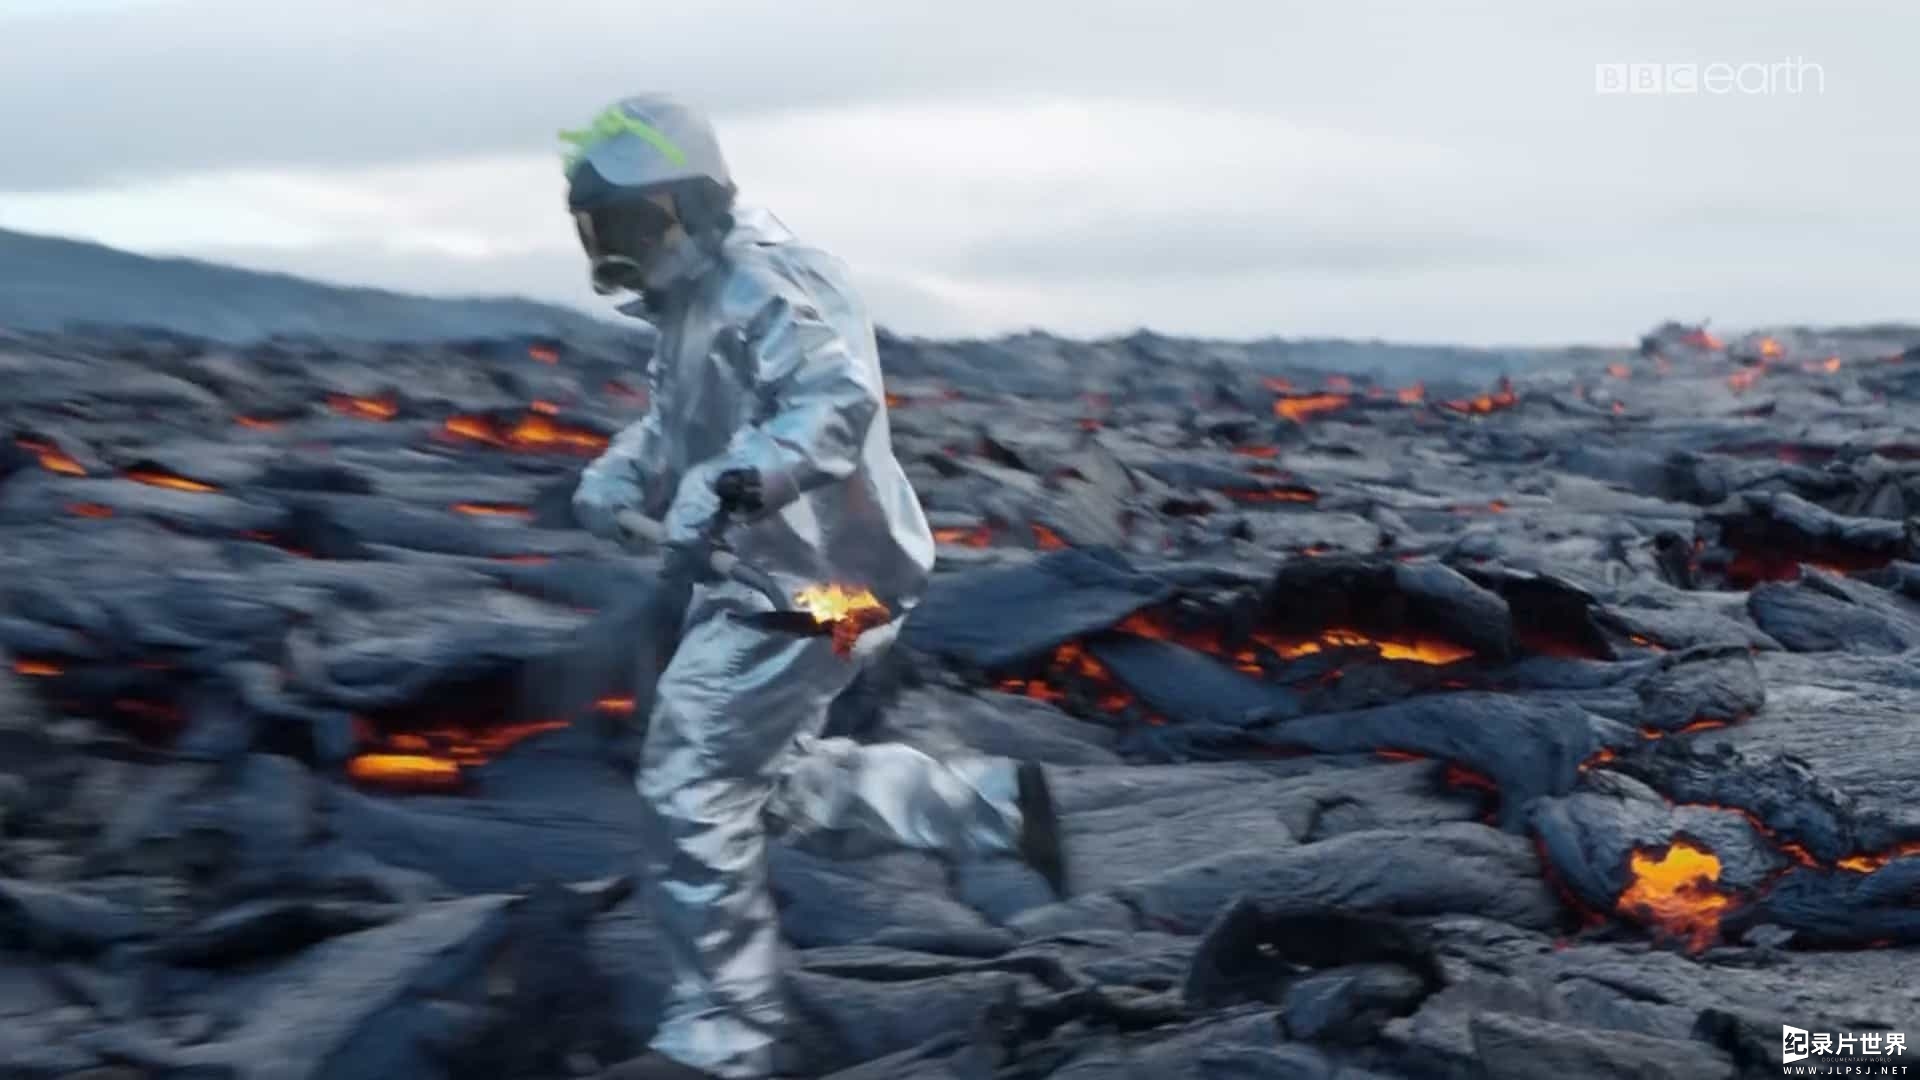 BBC纪录片《探索火山 Exploration Volcano 2022》全8集